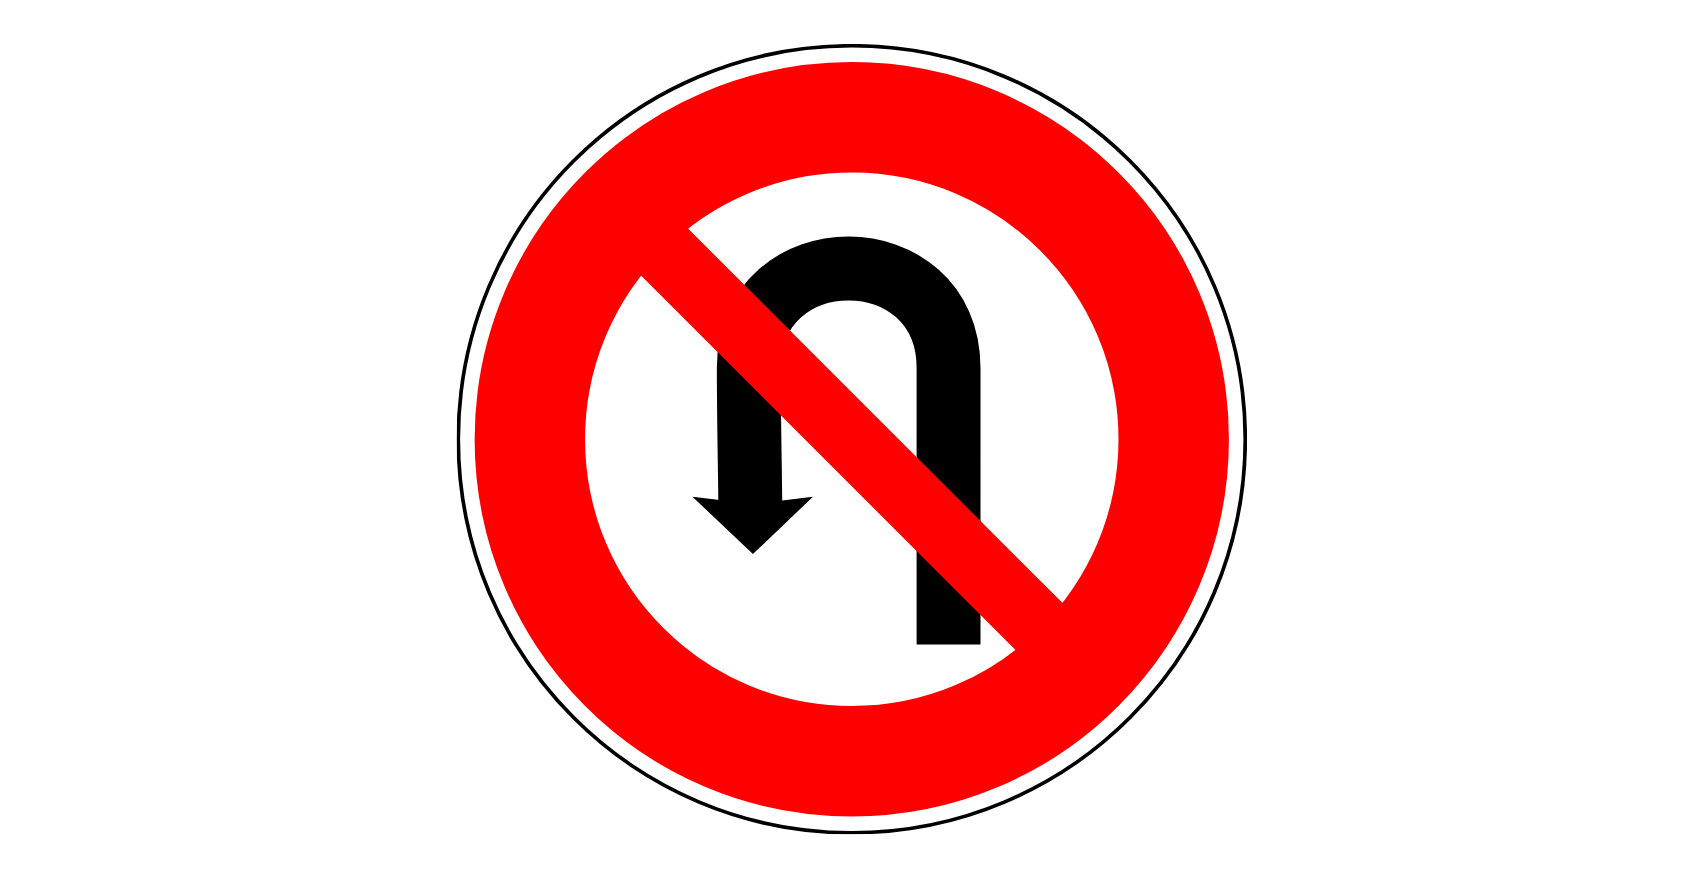 No U-Turn Signs